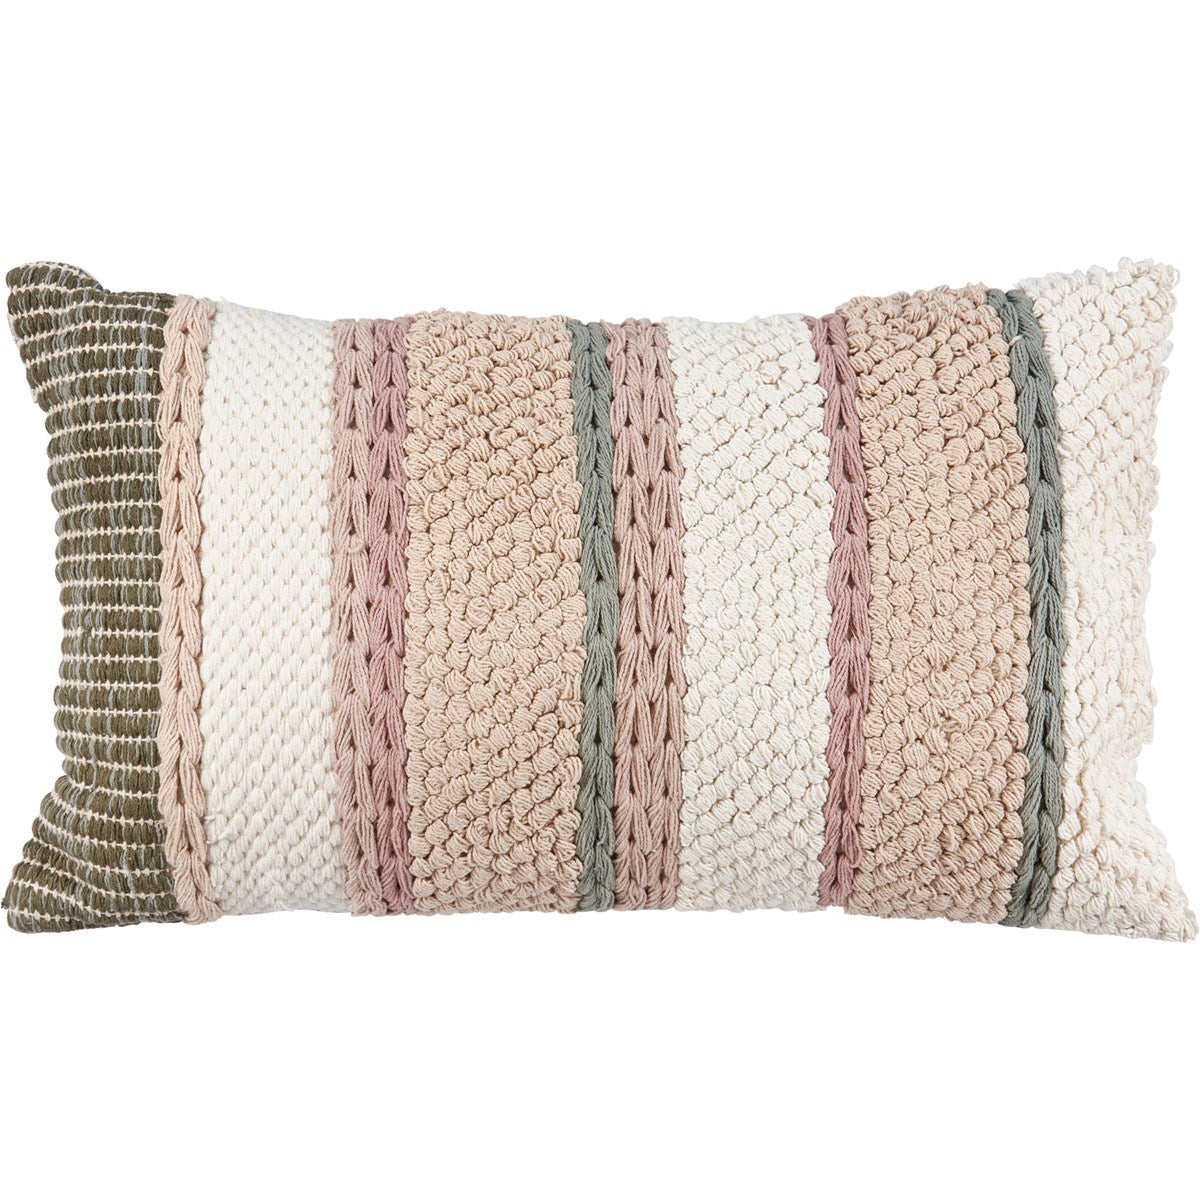 Striped Cottage Pillow 25" Neutral Tones